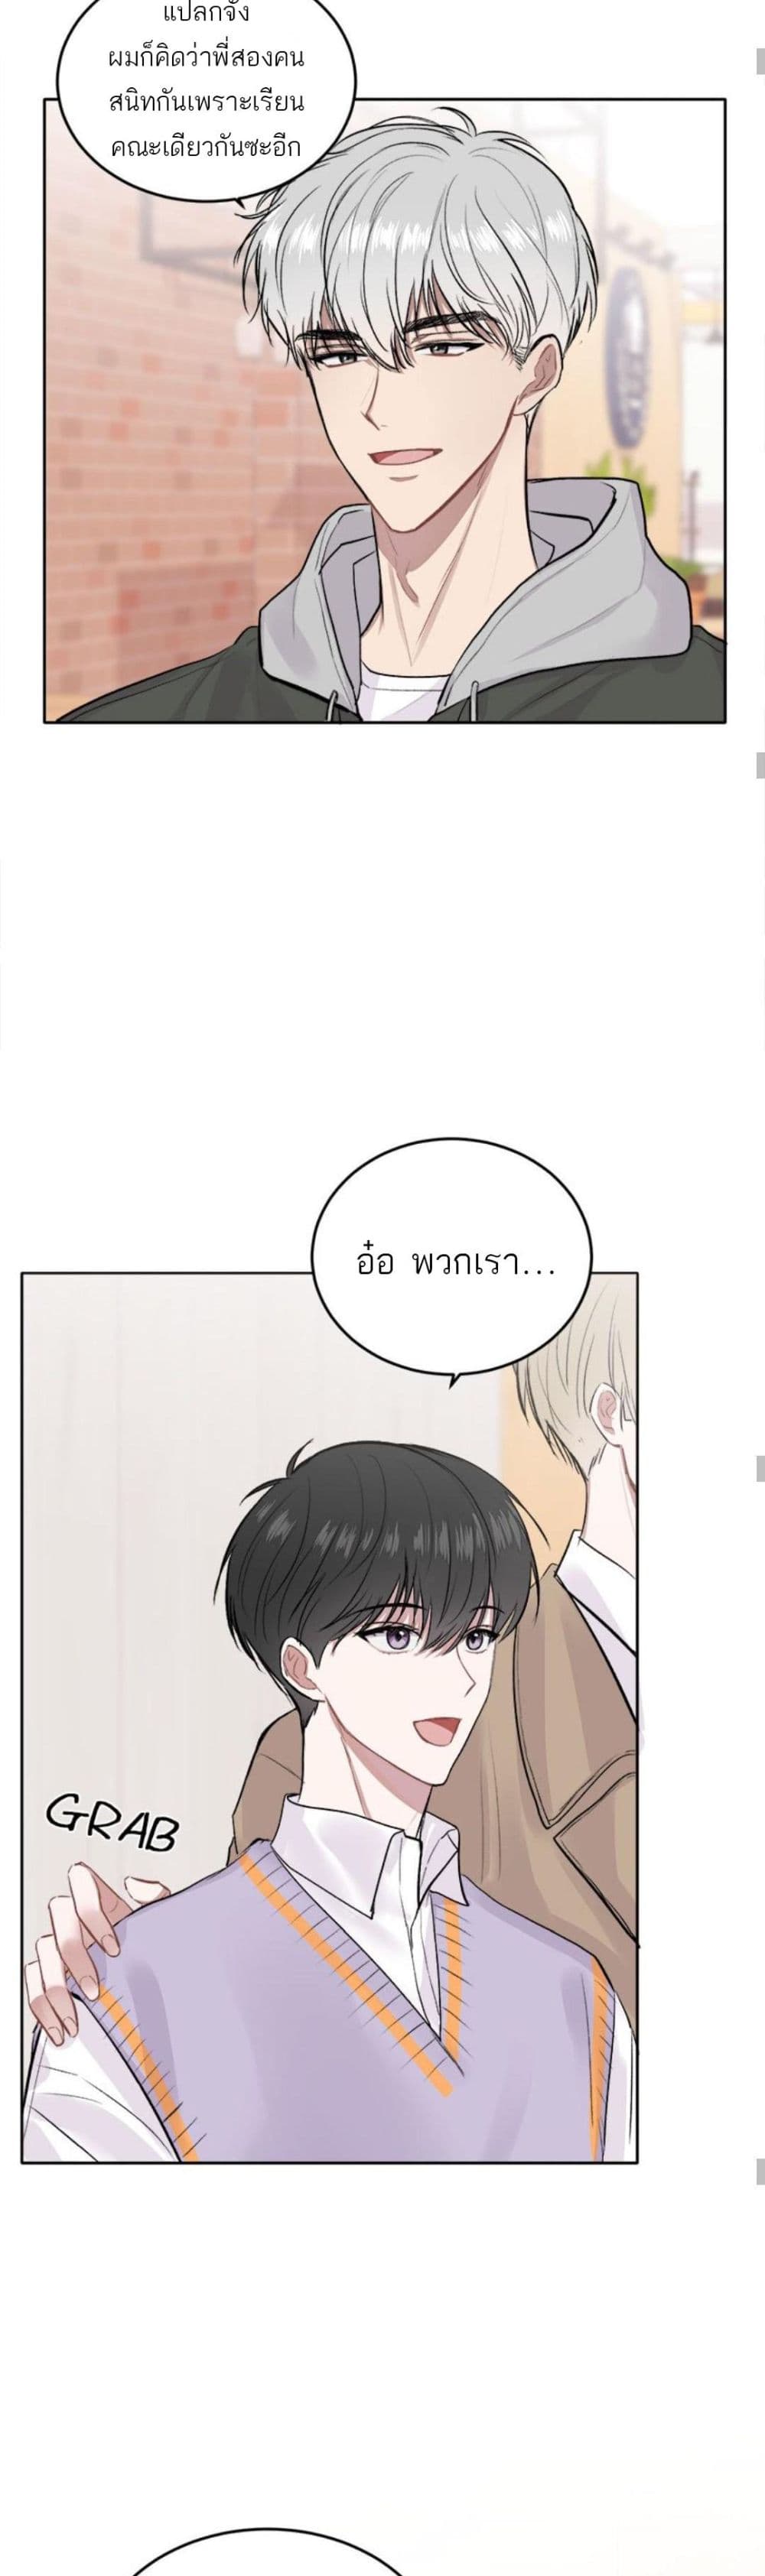 Don’t Cry, Sunbae! 4 (16)